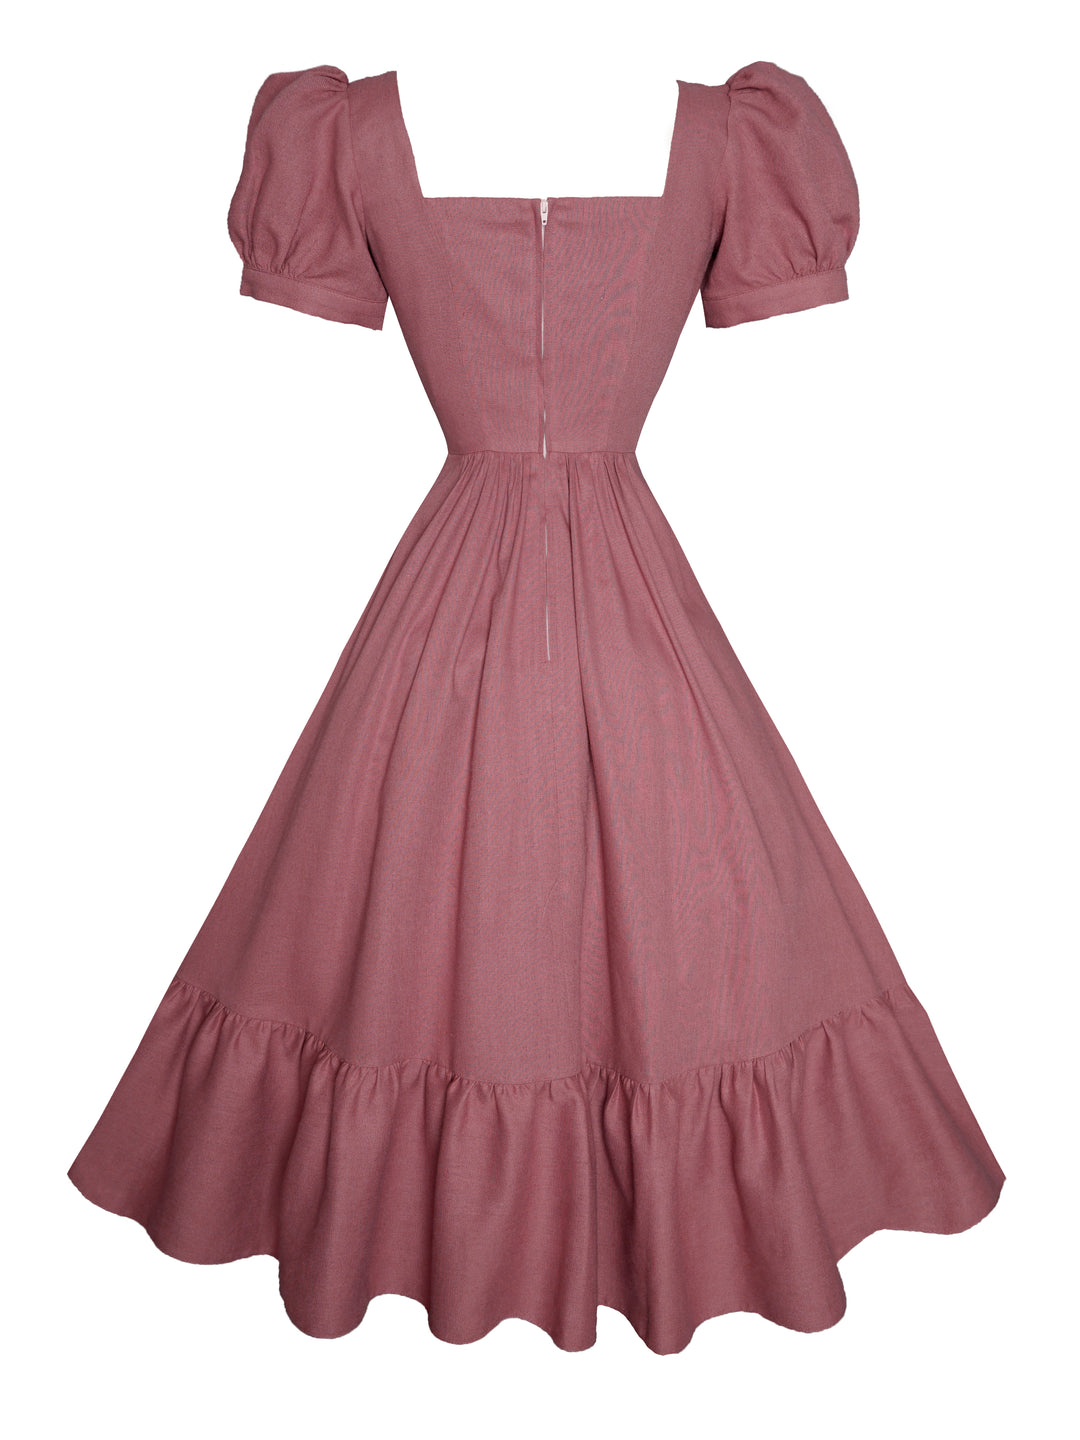 MTO - Isadora Dress in Antique Rose Linen